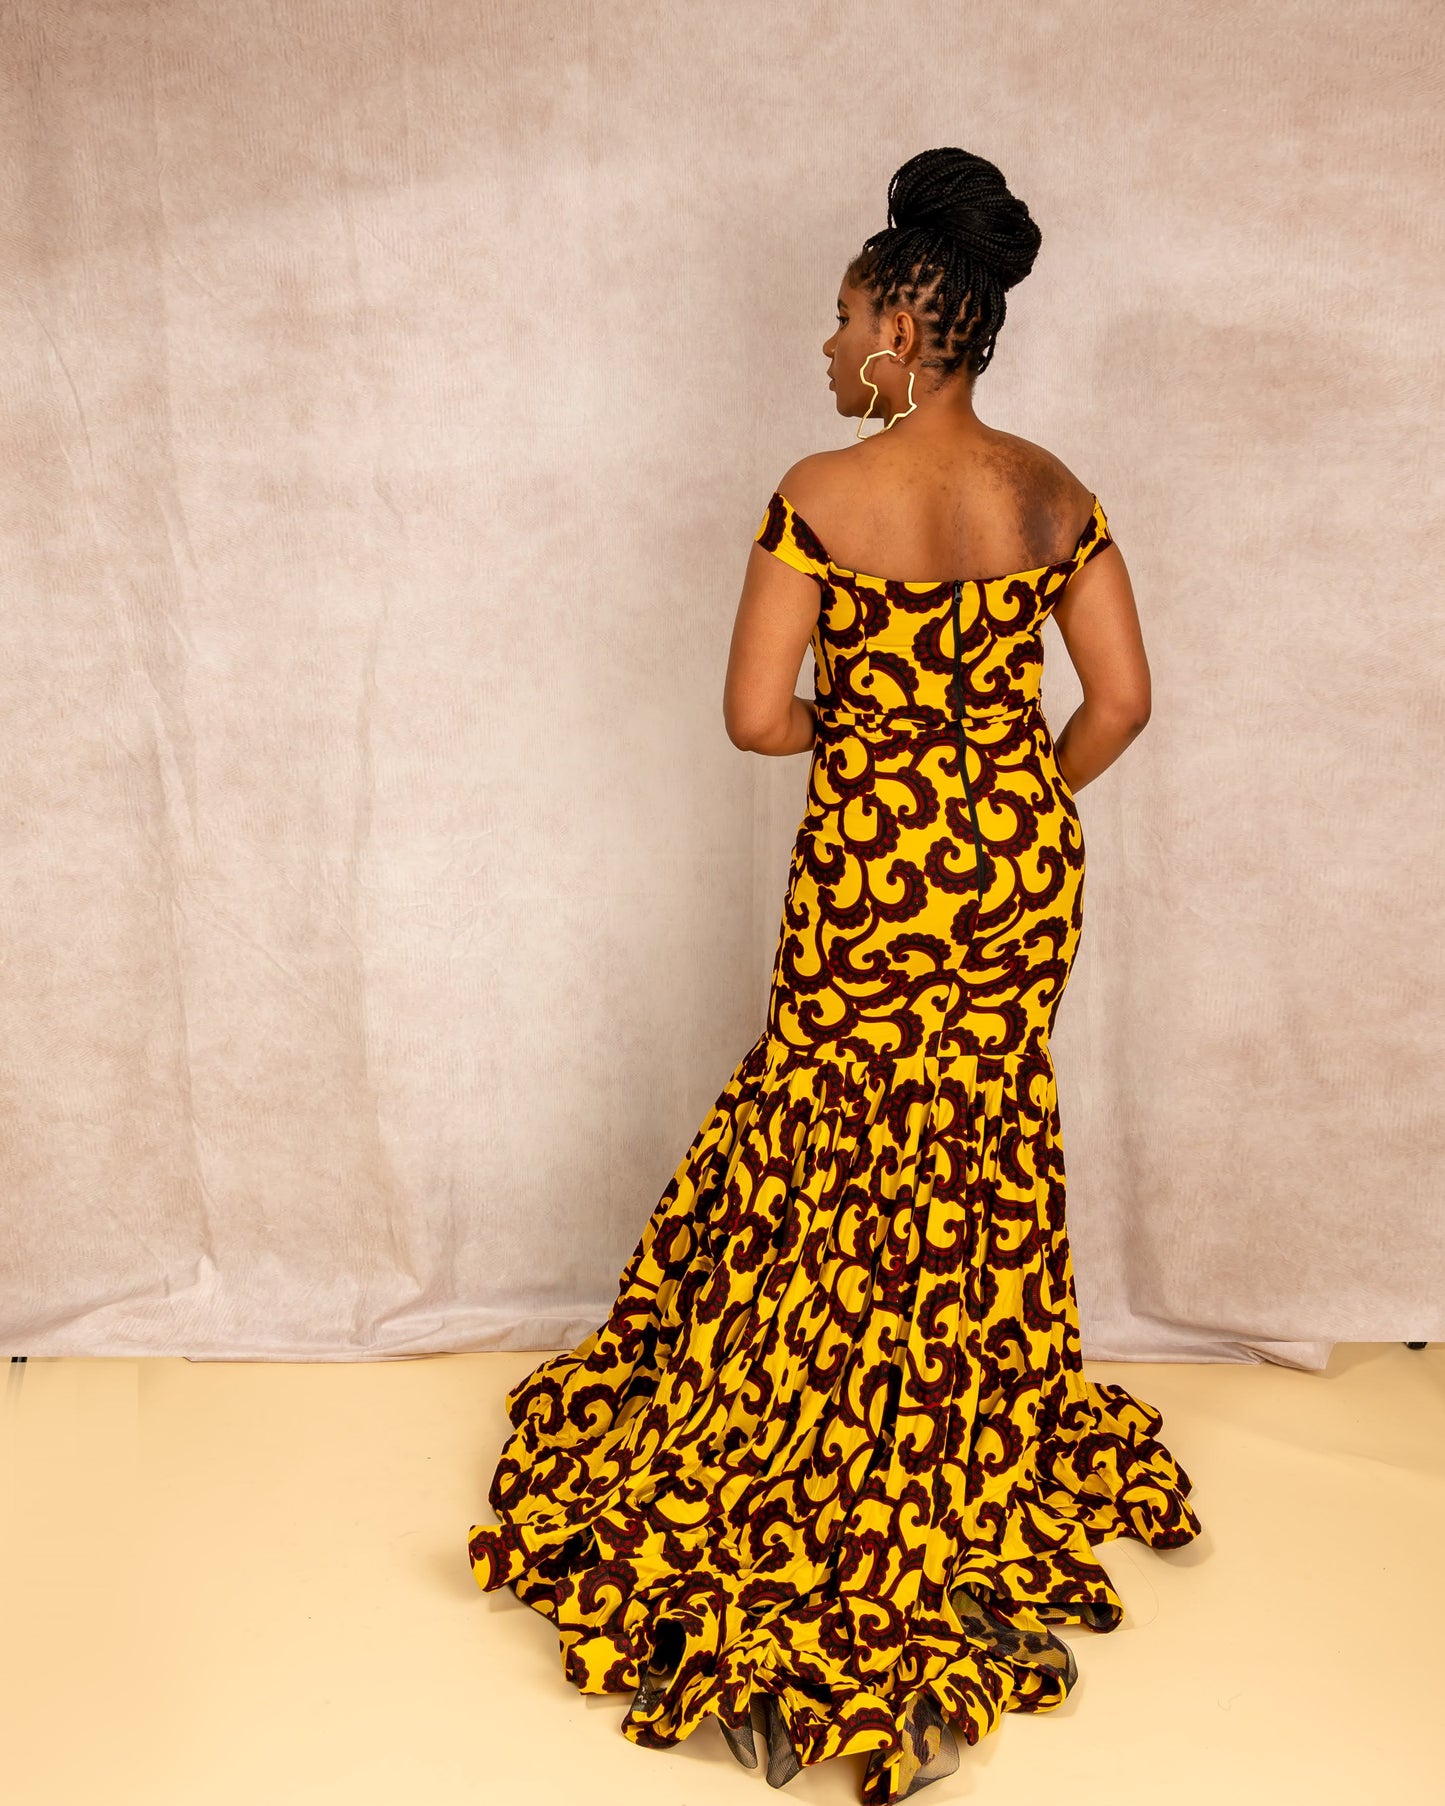 Susu African print Dress